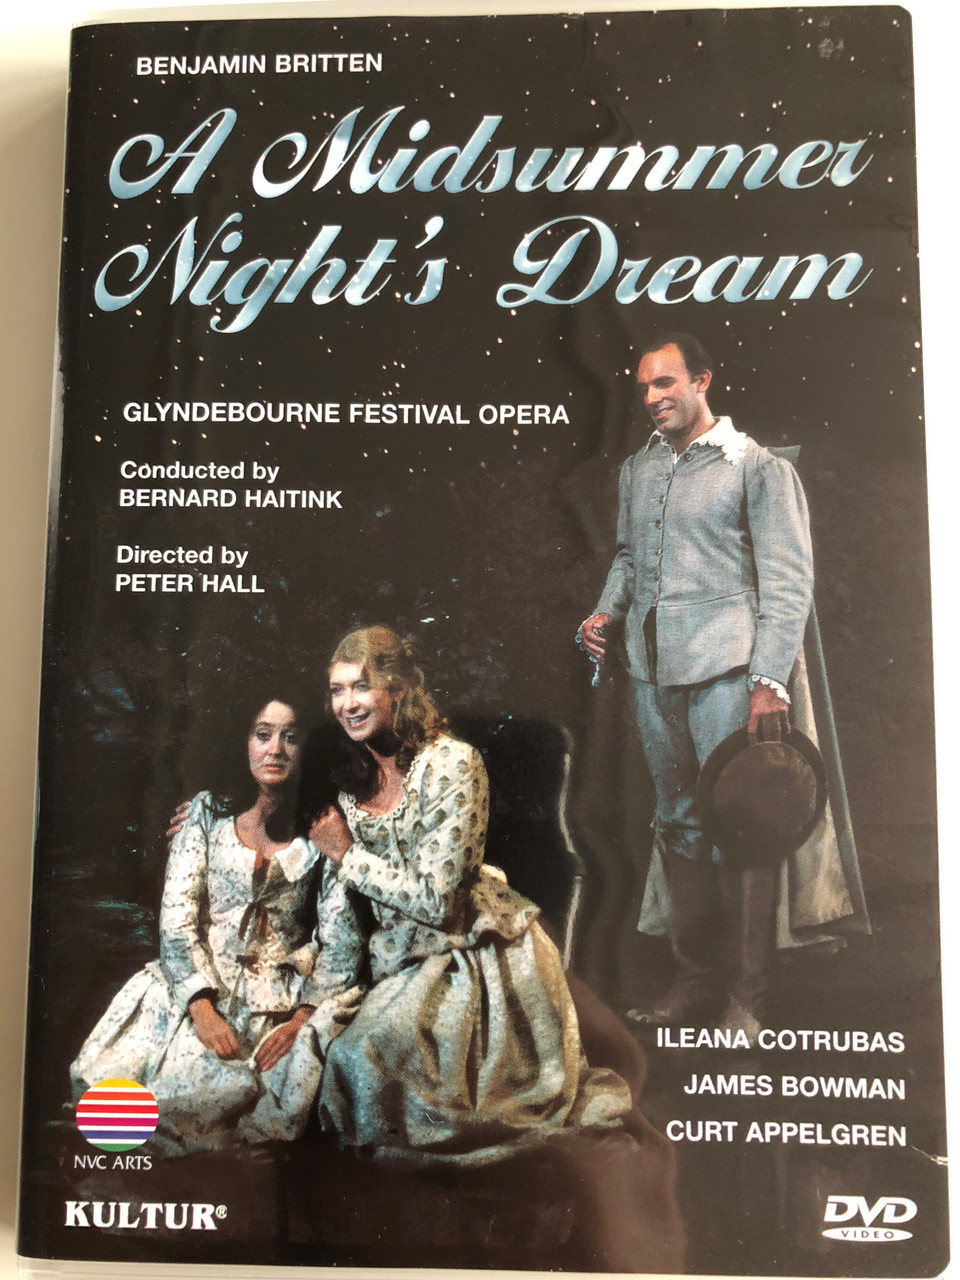 A Midsummer Night's Dream DVD 1981 / Glyndenbourne Festival Opera /  Benjamin Britten / Conducted by Bernard Haitink / Directed by Peter Hall /  Ileana Cotrubas, JAmes Bowman, Curt Appelgren - Bible in My Language